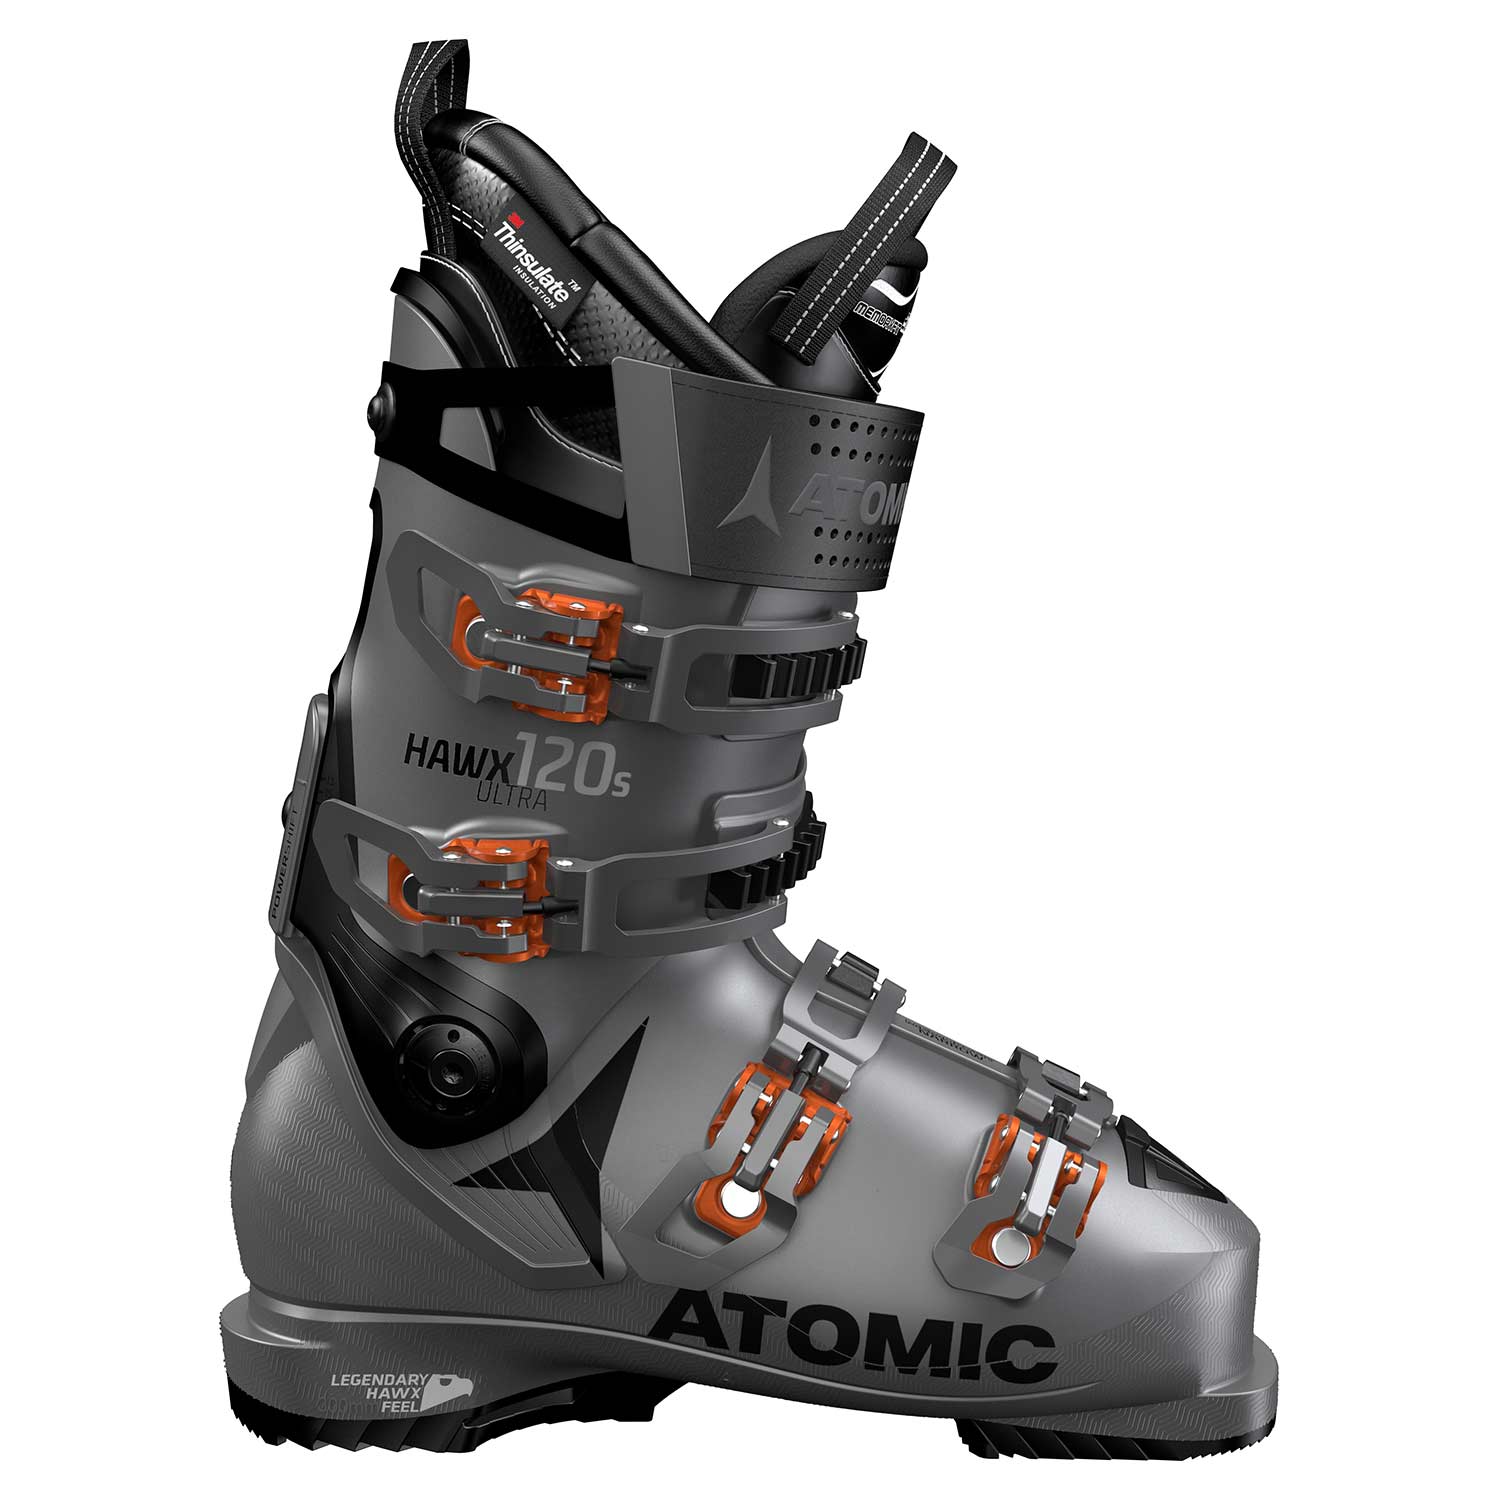 Clearance Ski Boots | Cheap Ski Boots | Ski boots sale uk - Snowtrax